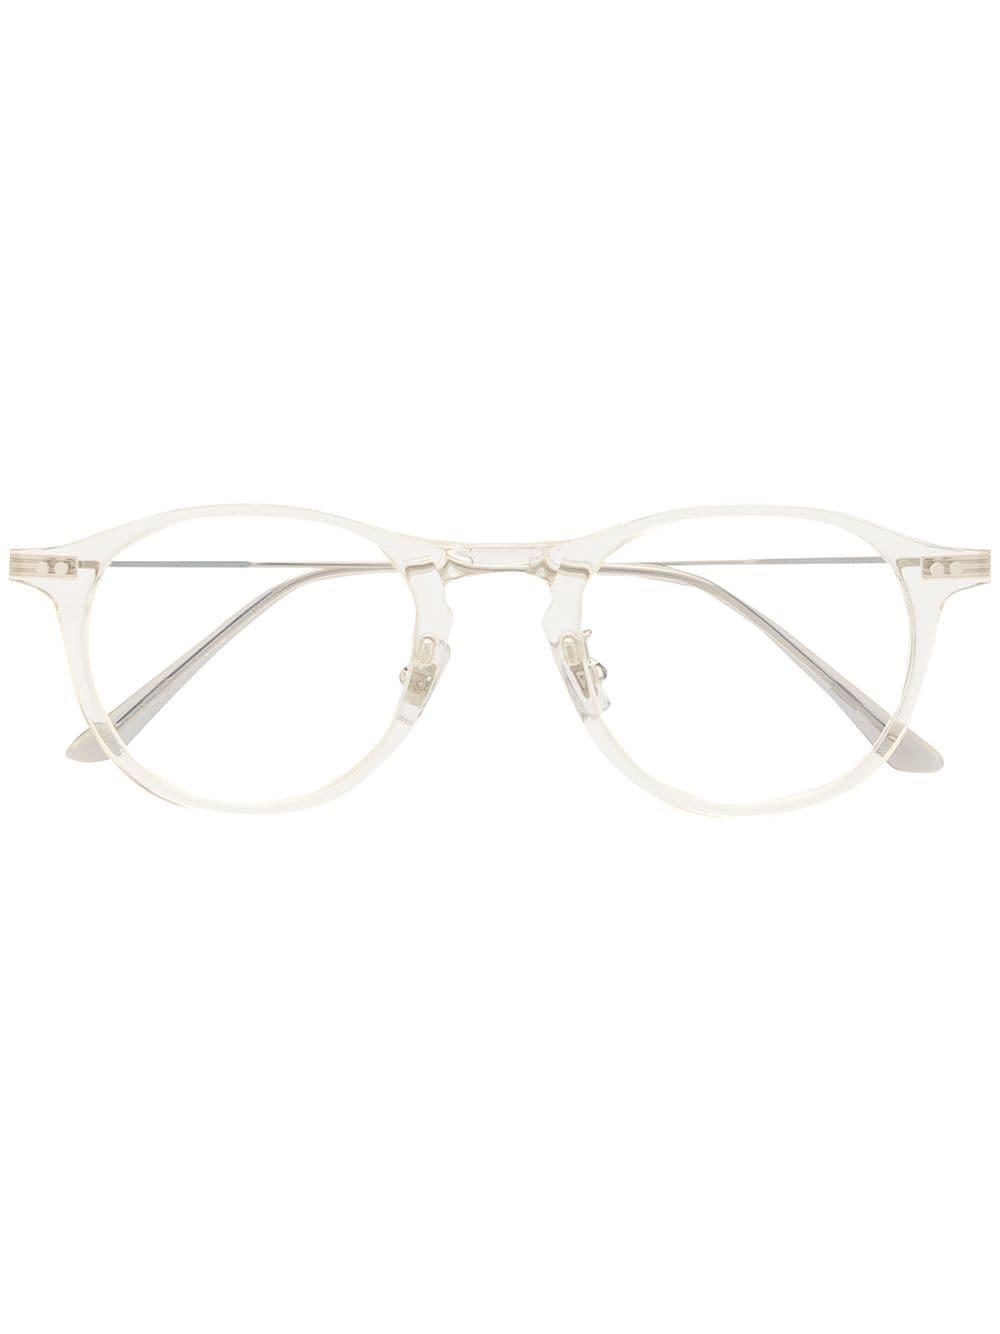 Gentle Monster Cozmo C1 Optical Glasses - White | LookMazing